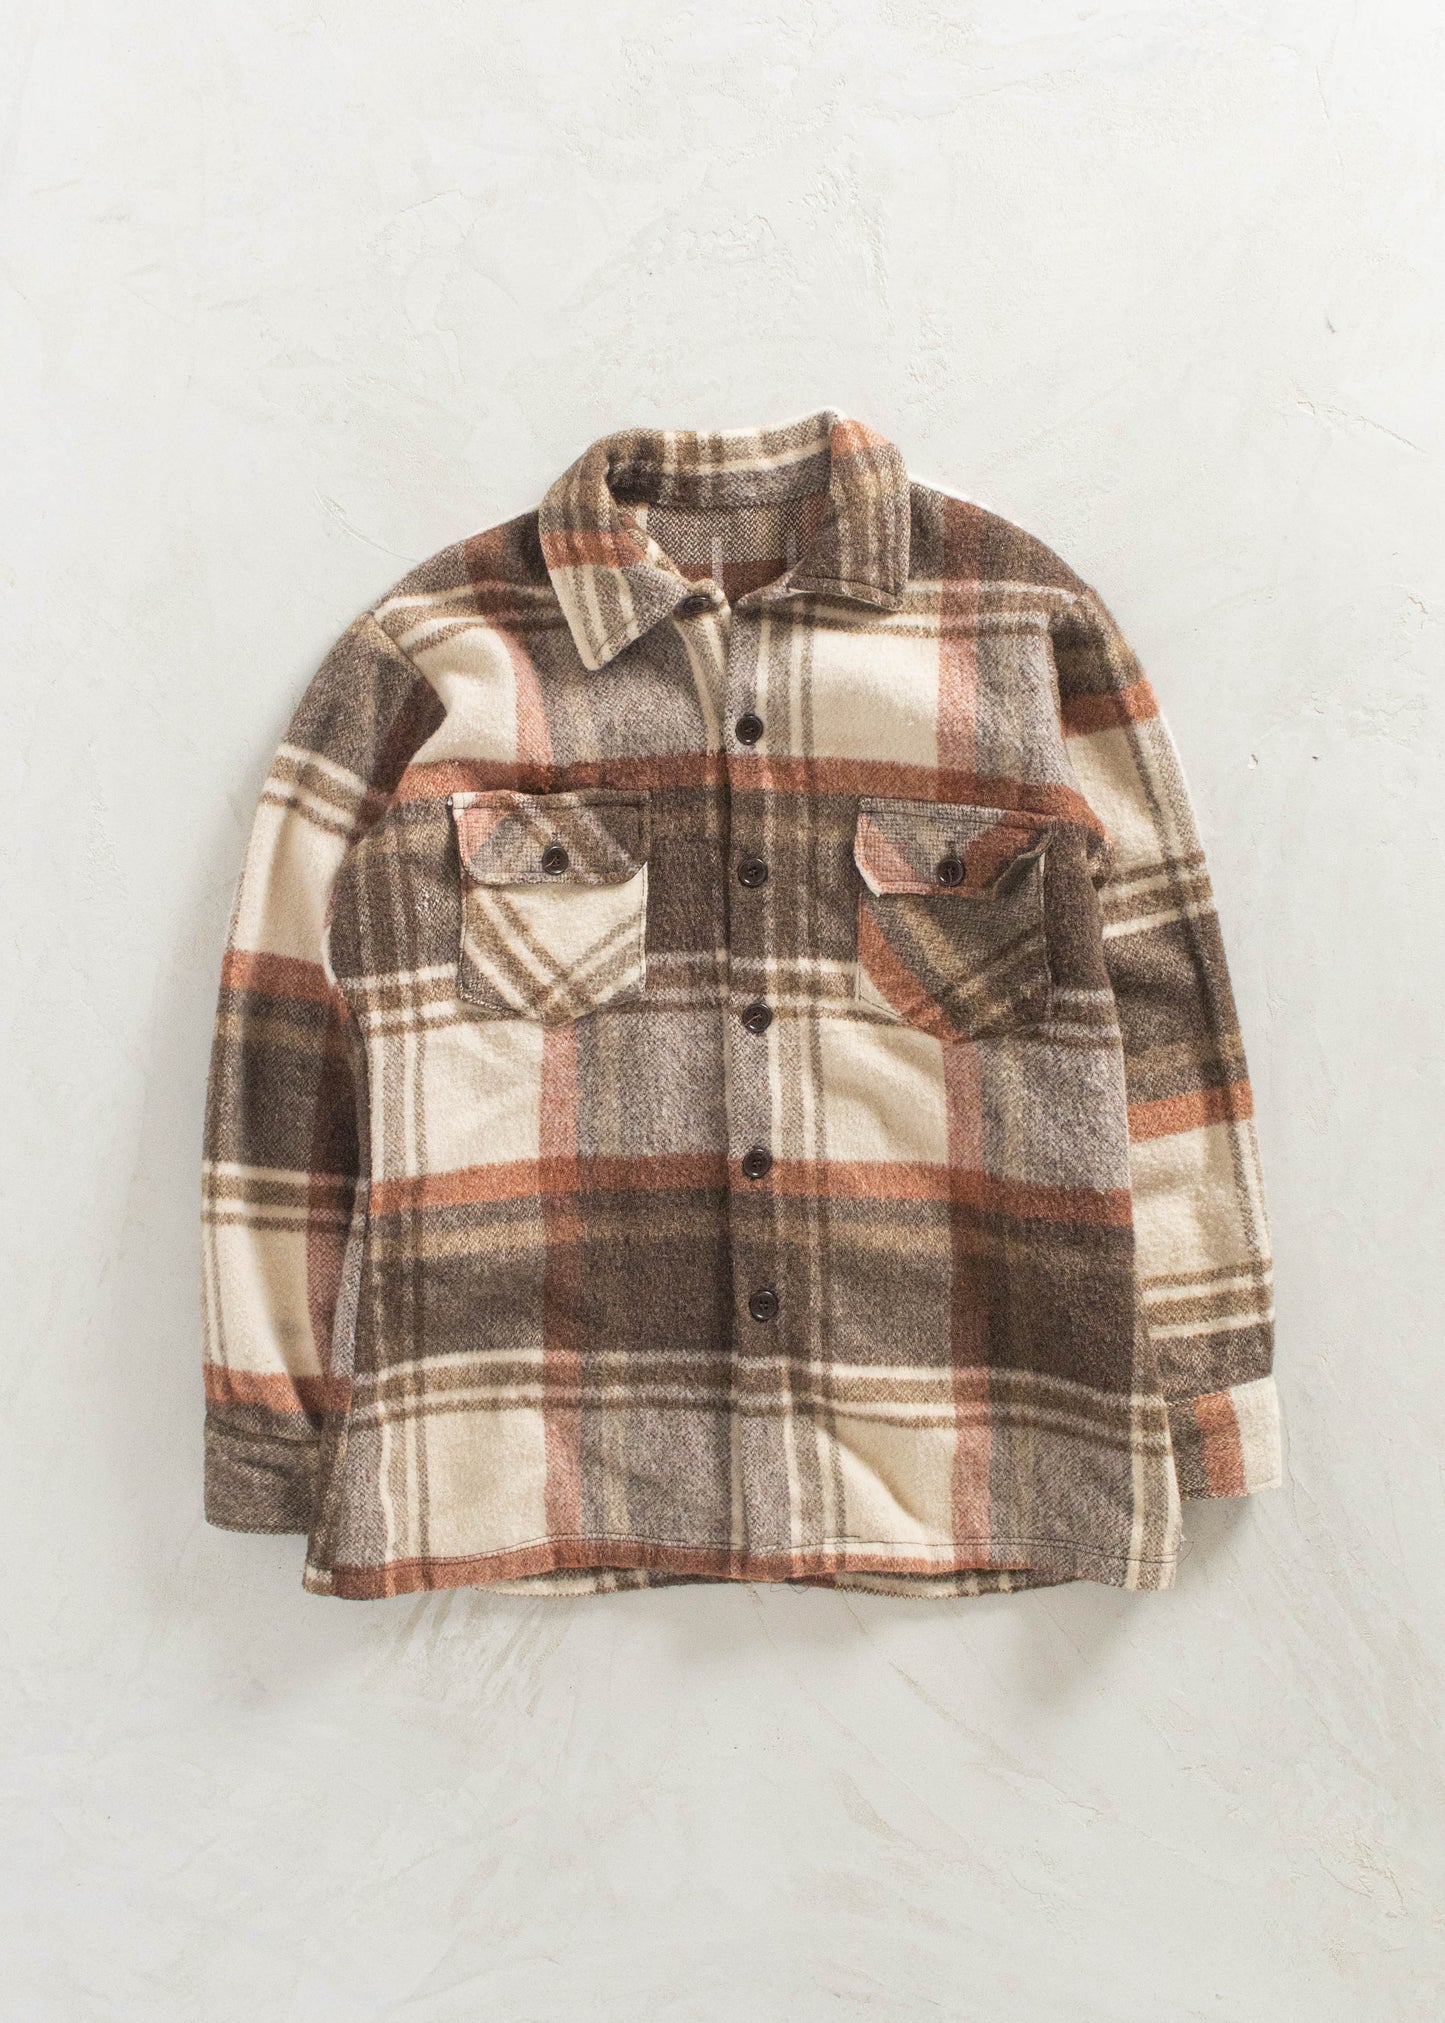 Vintage Wool Flannel Button Up Shirt Size L/XL